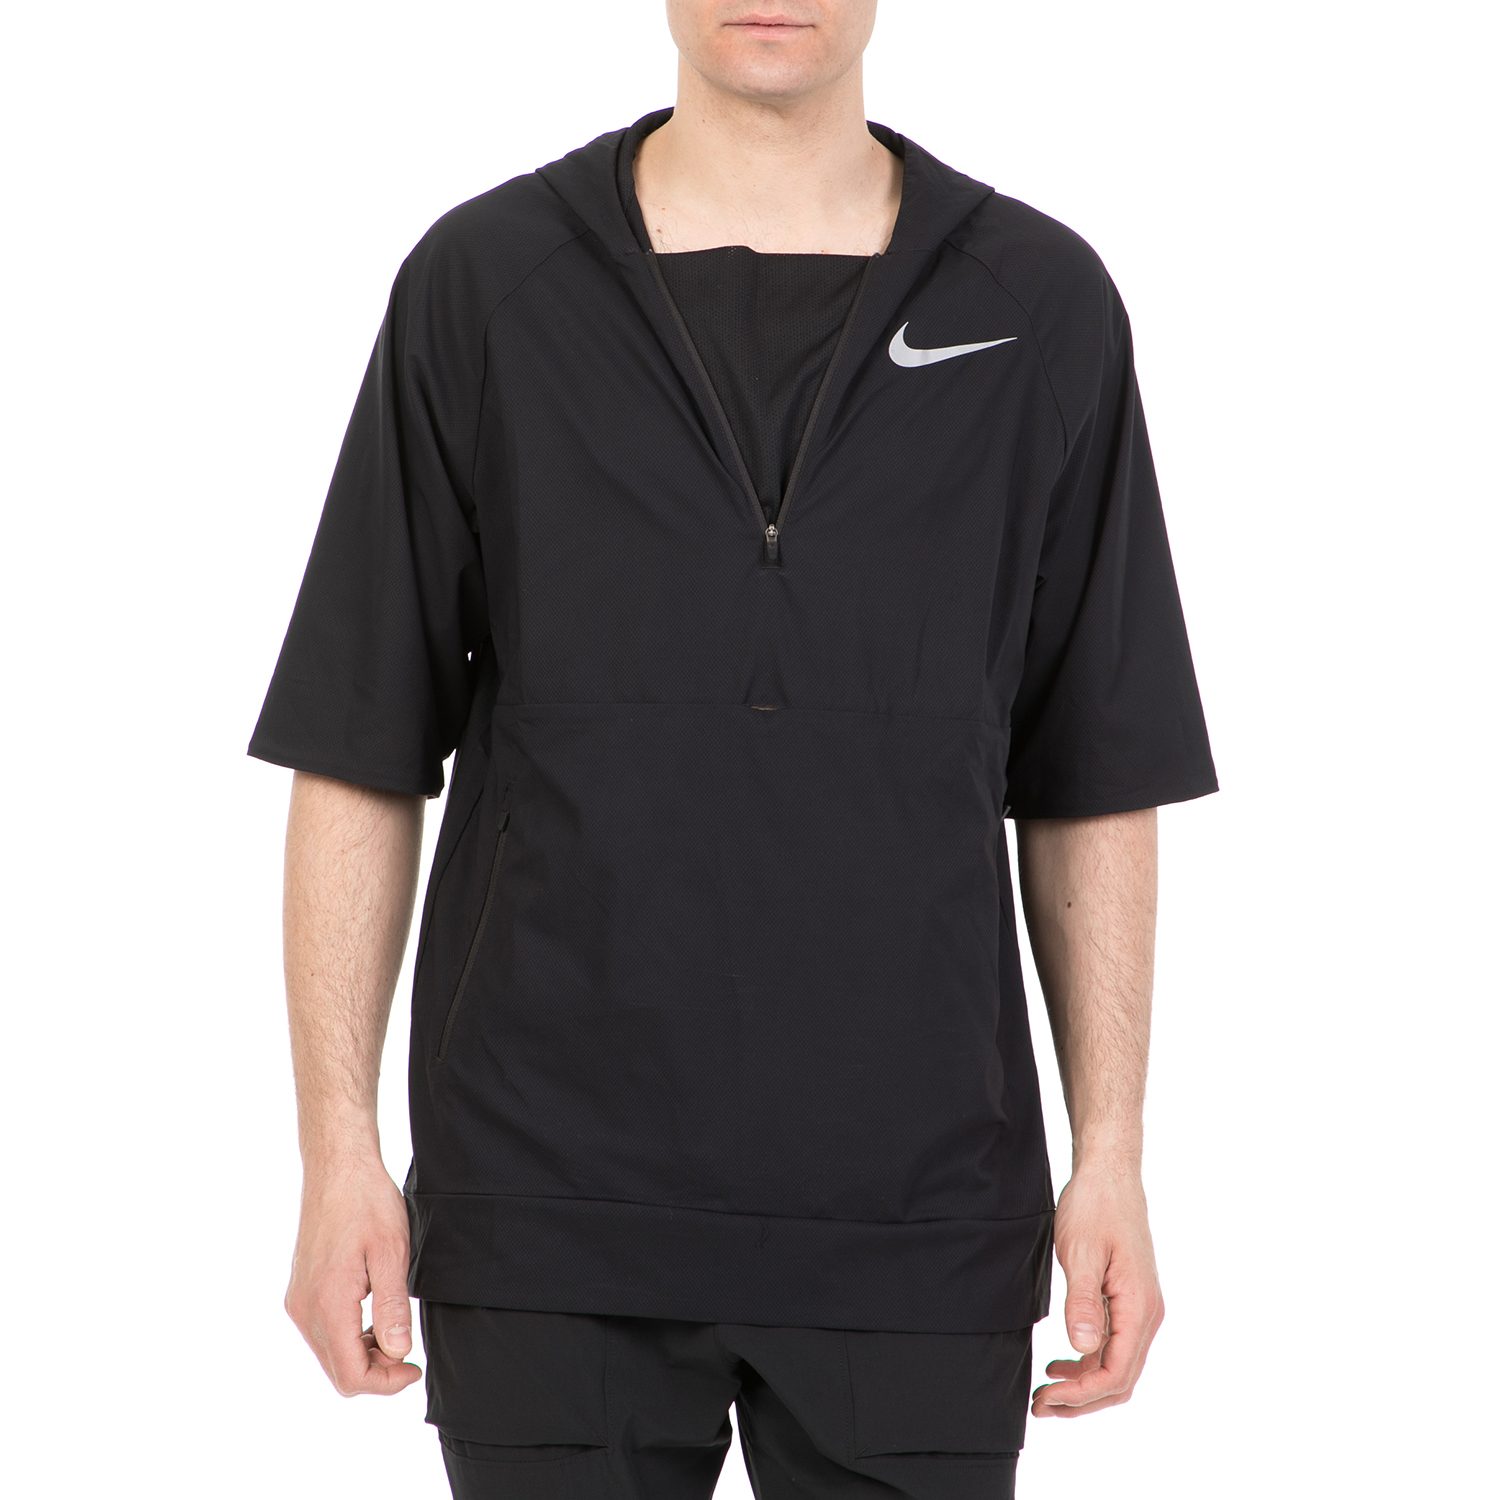 NIKE - Ανδρικό κοντομάνικο τζάκετ για τρέξιμο Nike Flex μαύρο Ανδρικά/Ρούχα/Πανωφόρια/Τζάκετς